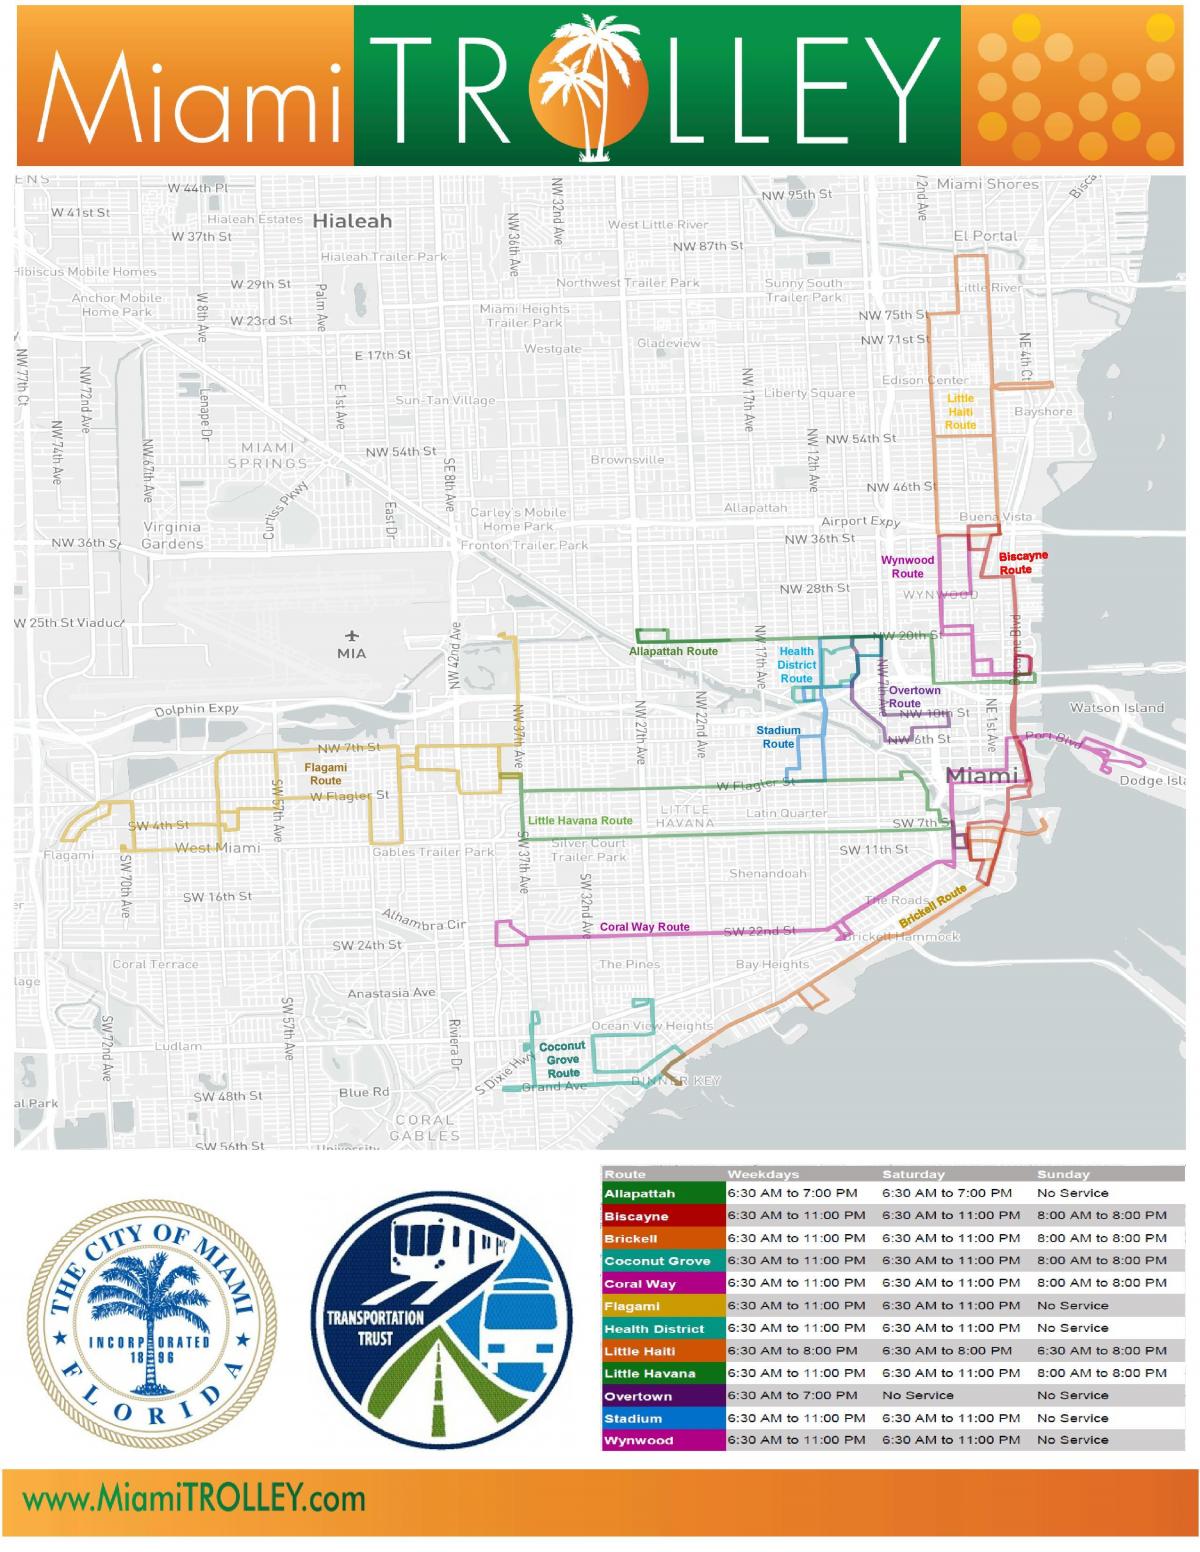 Plan des stations trolley de Miami